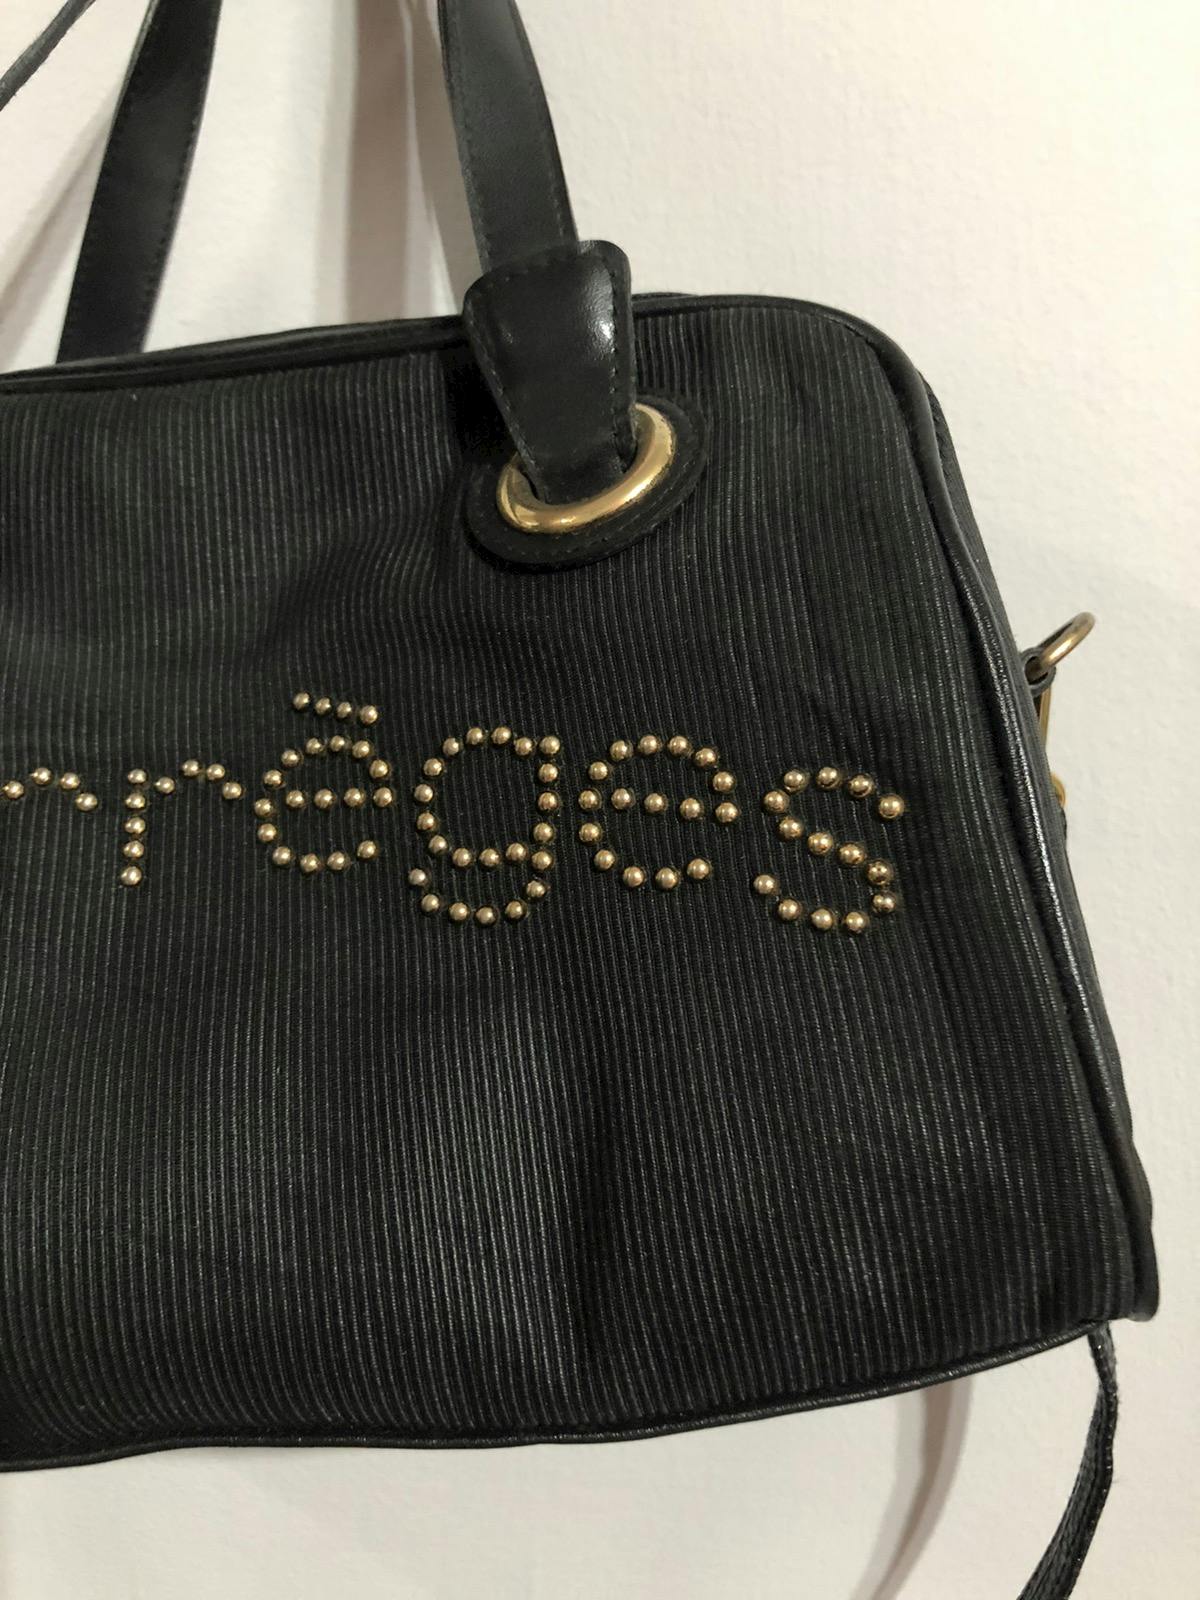 Vintage Courreges Speedy handbag - 3